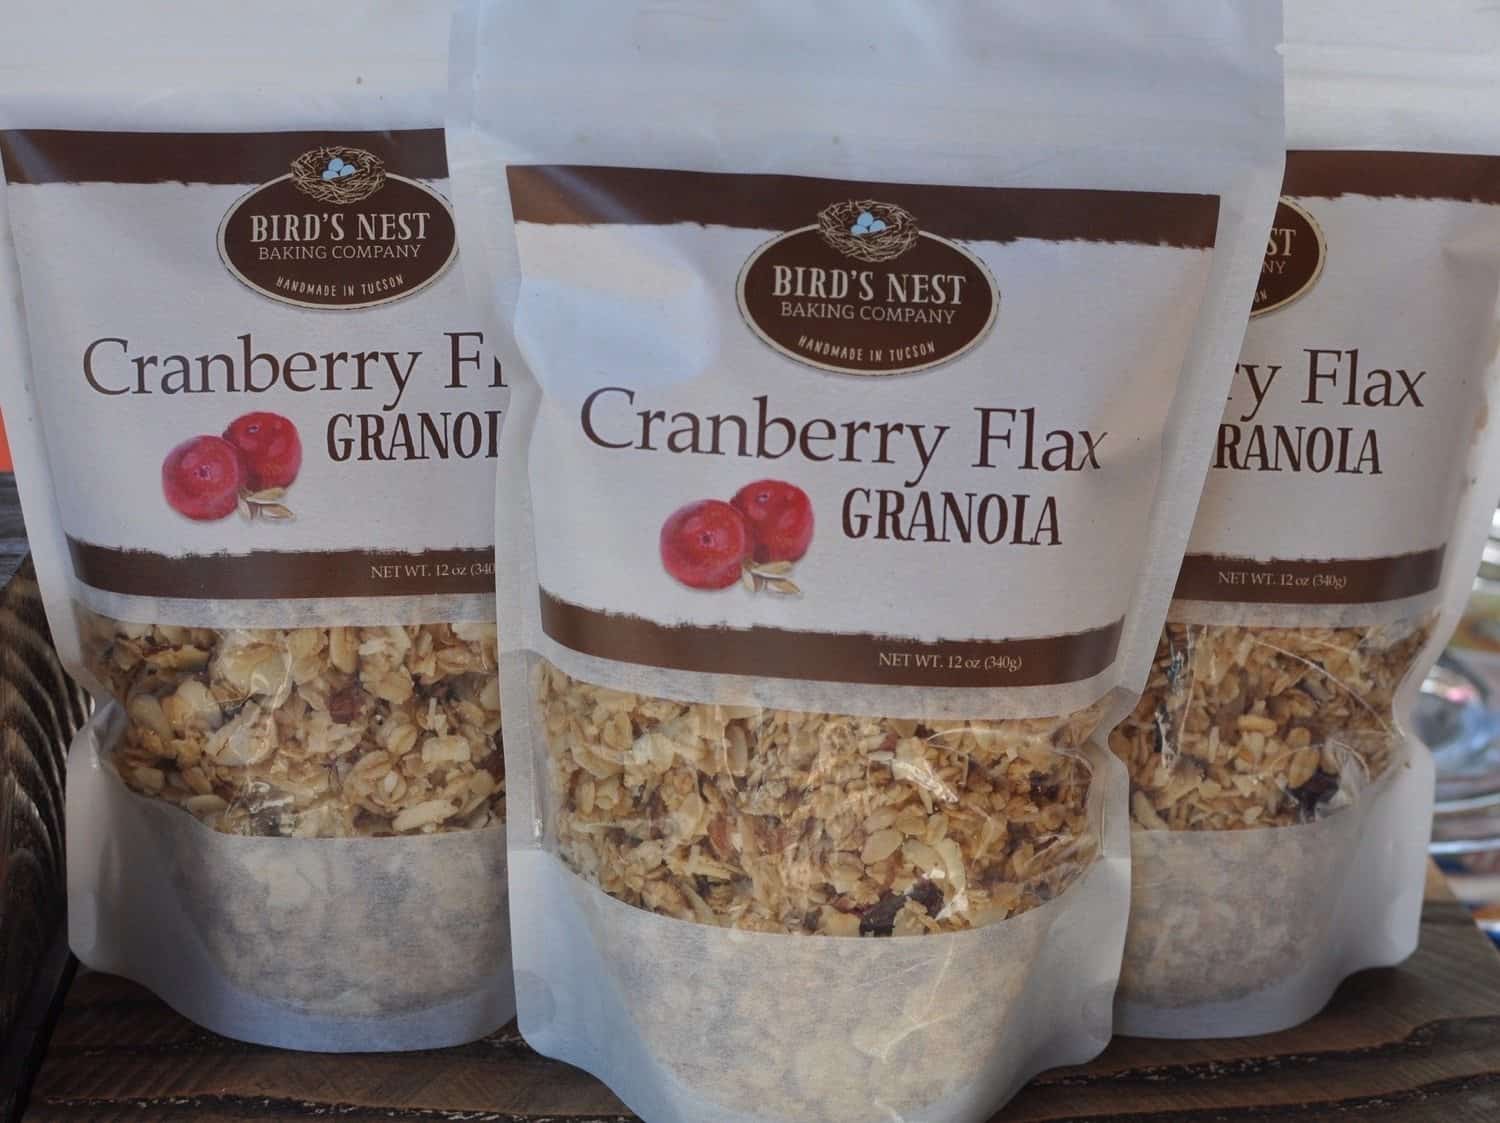 Cranberry Flax Granola by Bird's Nest Baking Company